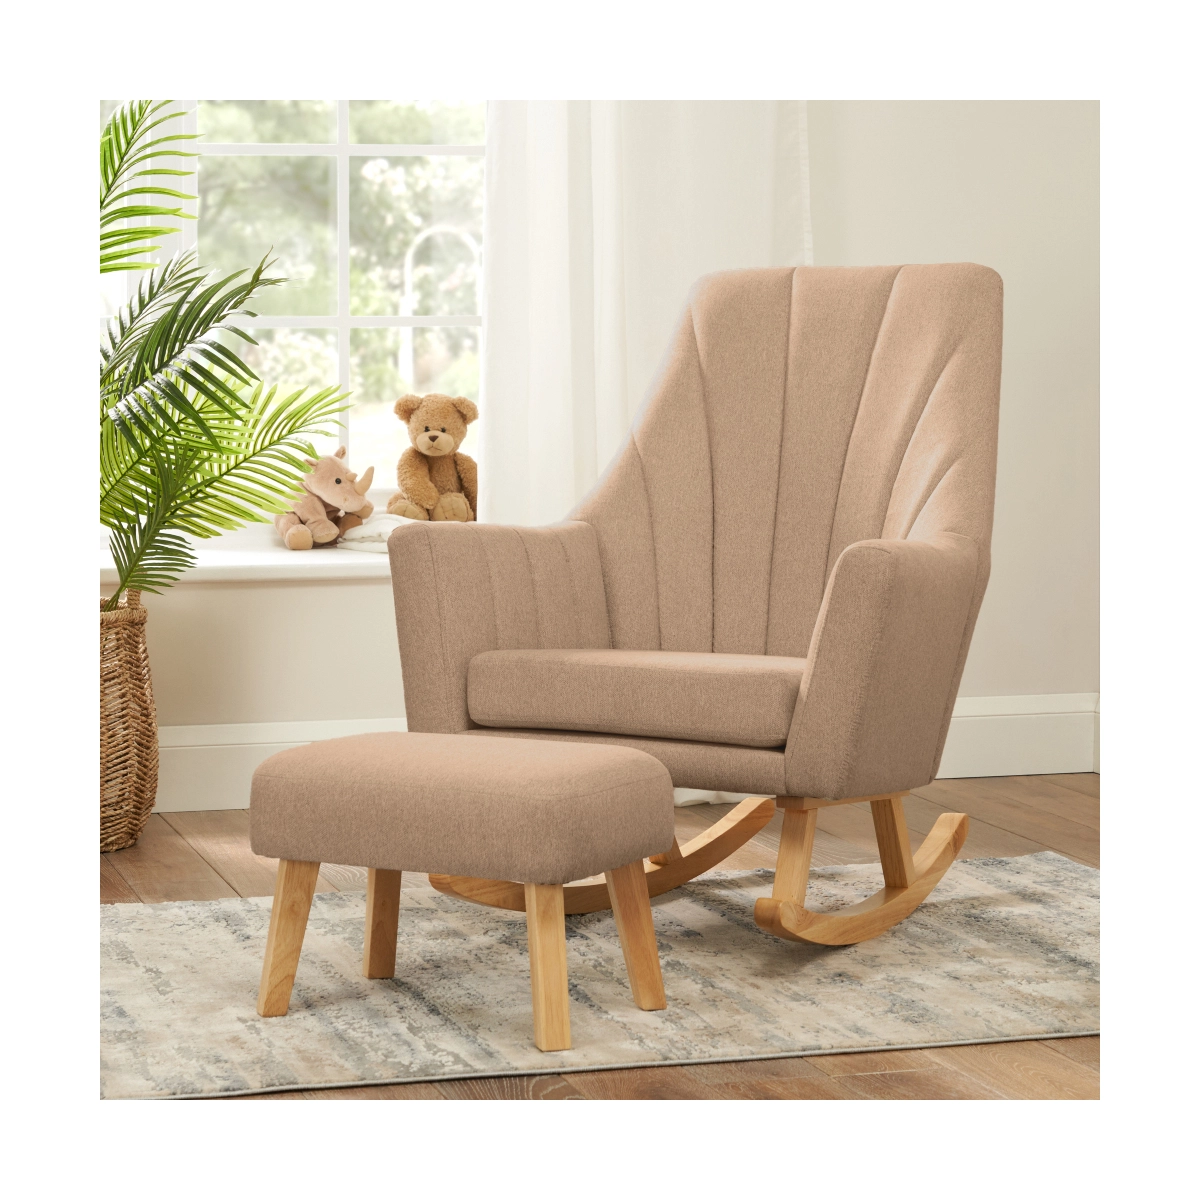 Image of Tutti Bambini Jonah Rocking Chair and Footstool Set-Caramel + Free Nursing Pillow Worth £59.99!